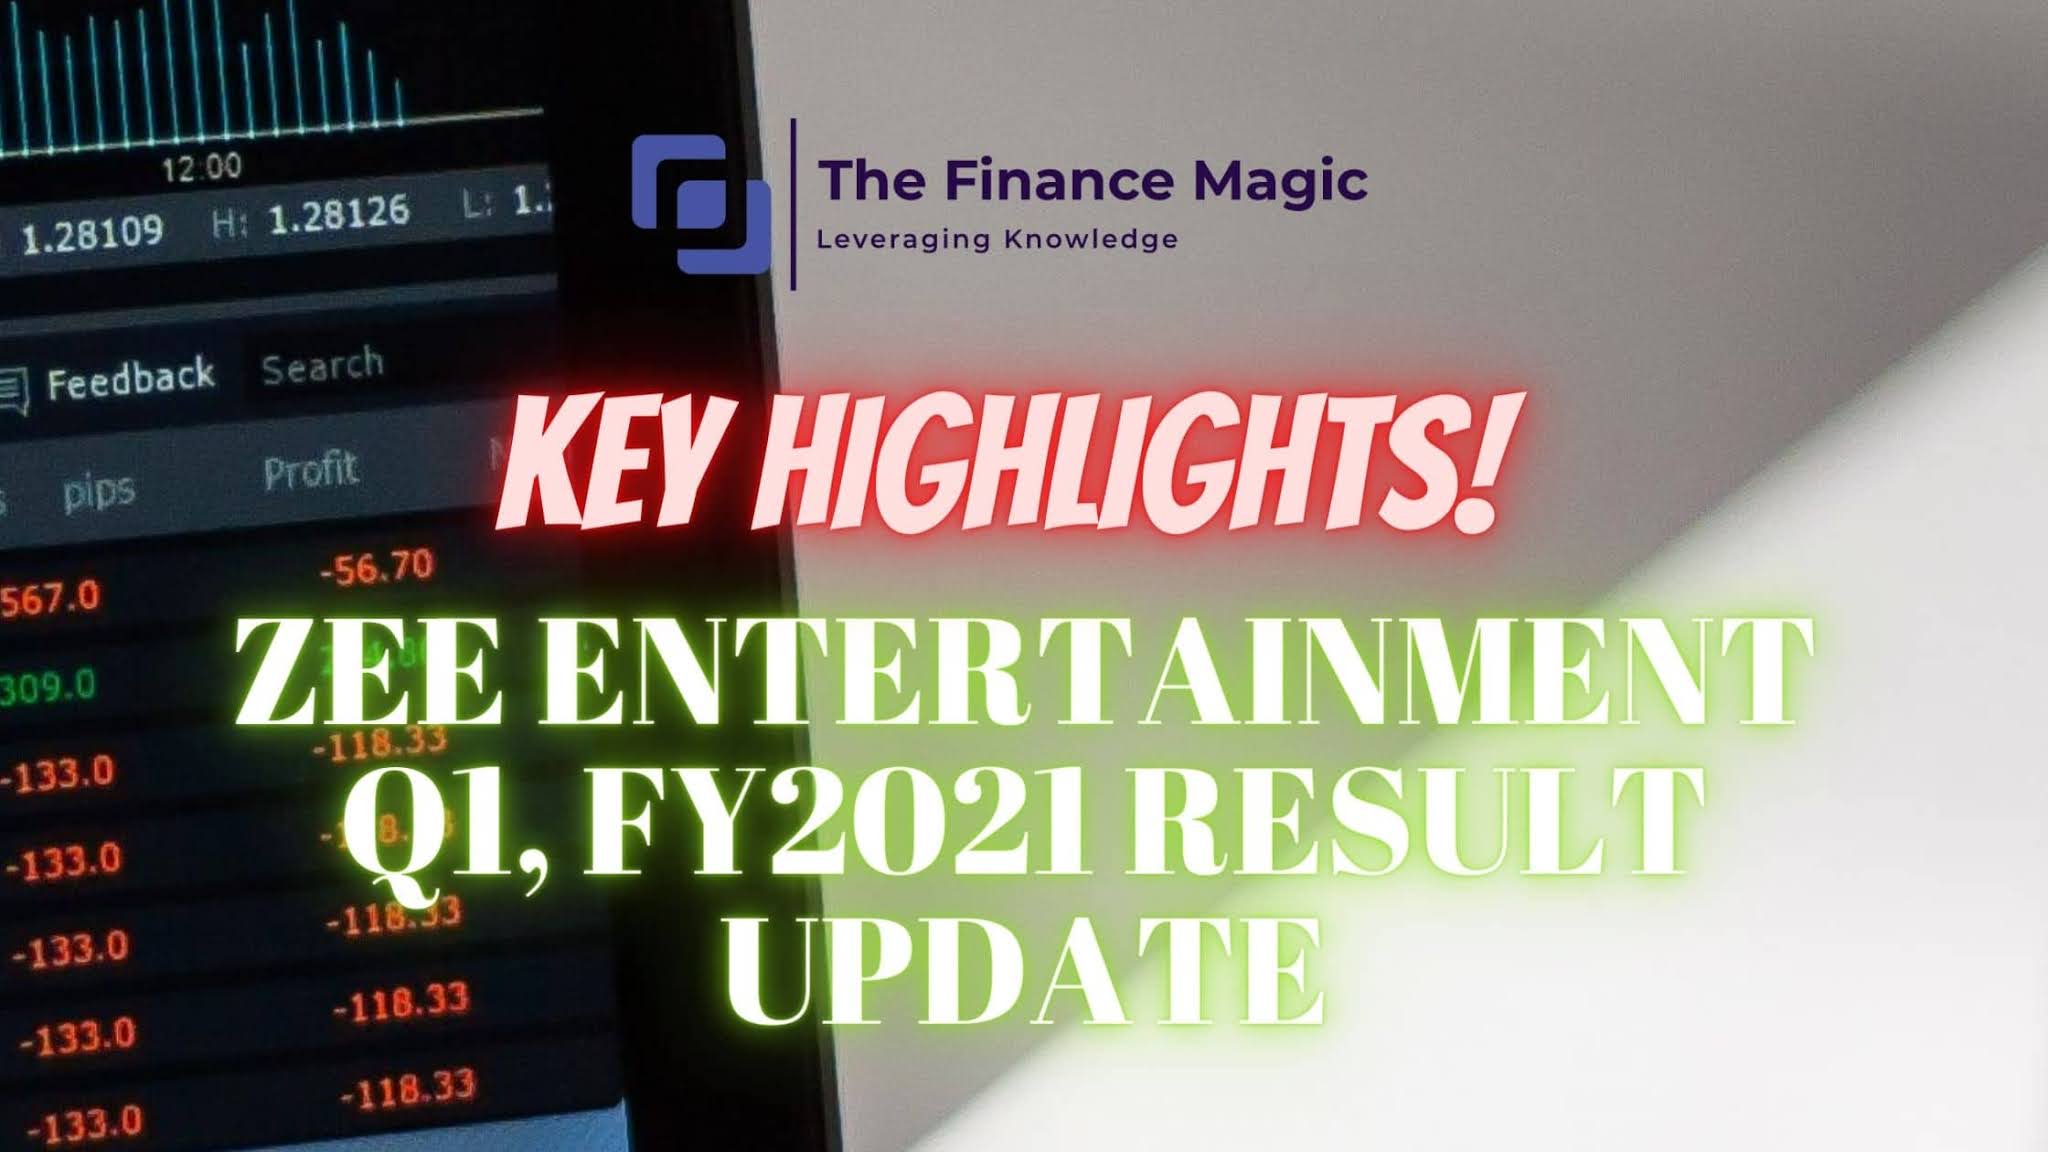 Zee Entertainment Q1, FY2021 Result Update